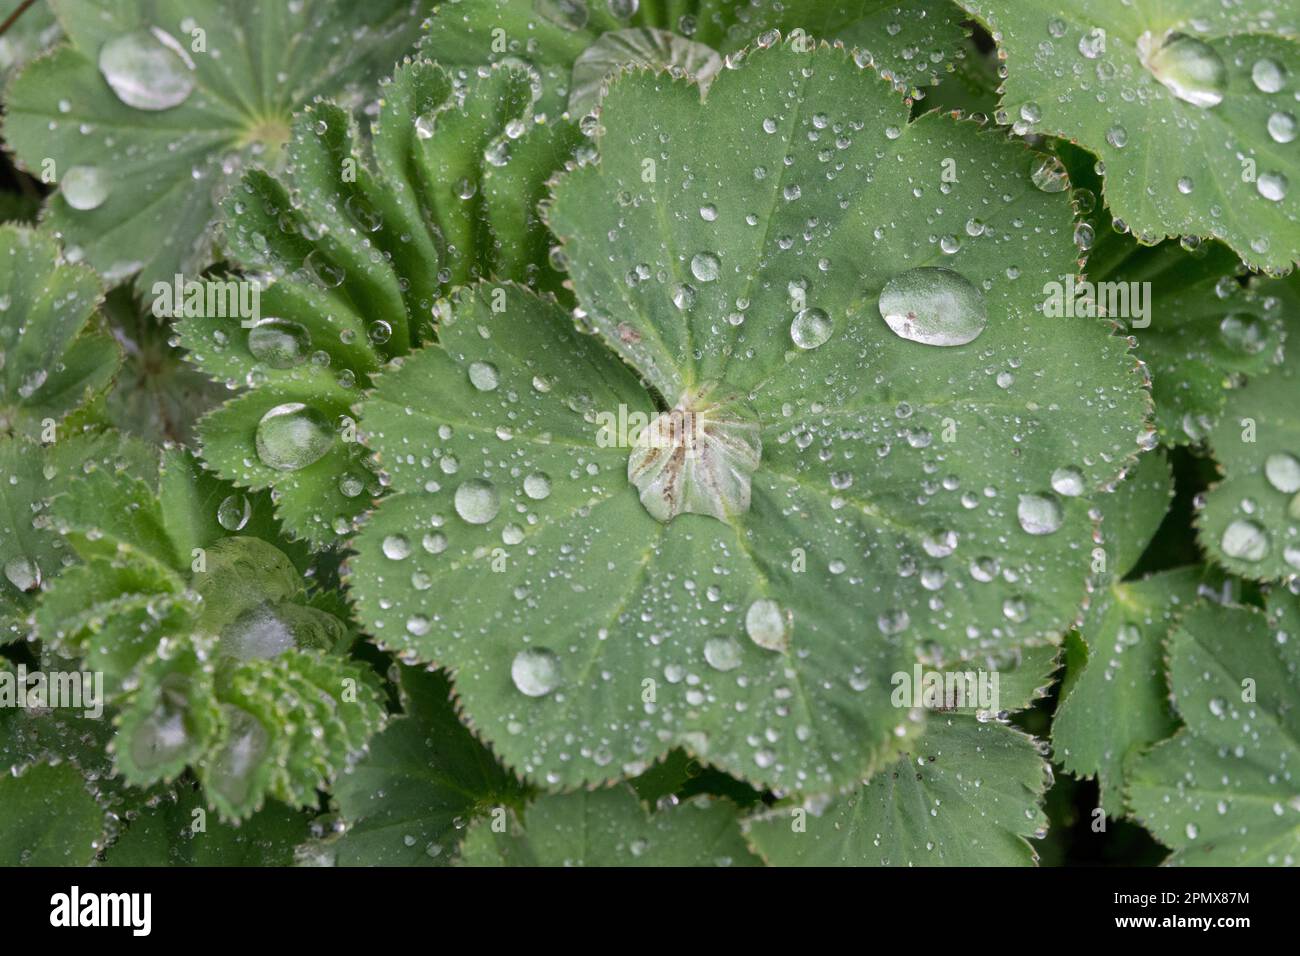 Alchemilla, Drops, Alchemilla mollis, Rain drops, Irish Silk, Raindrops, Ladys Mantle, Water drops, Droplets, Dewcup Leaf Stock Photo